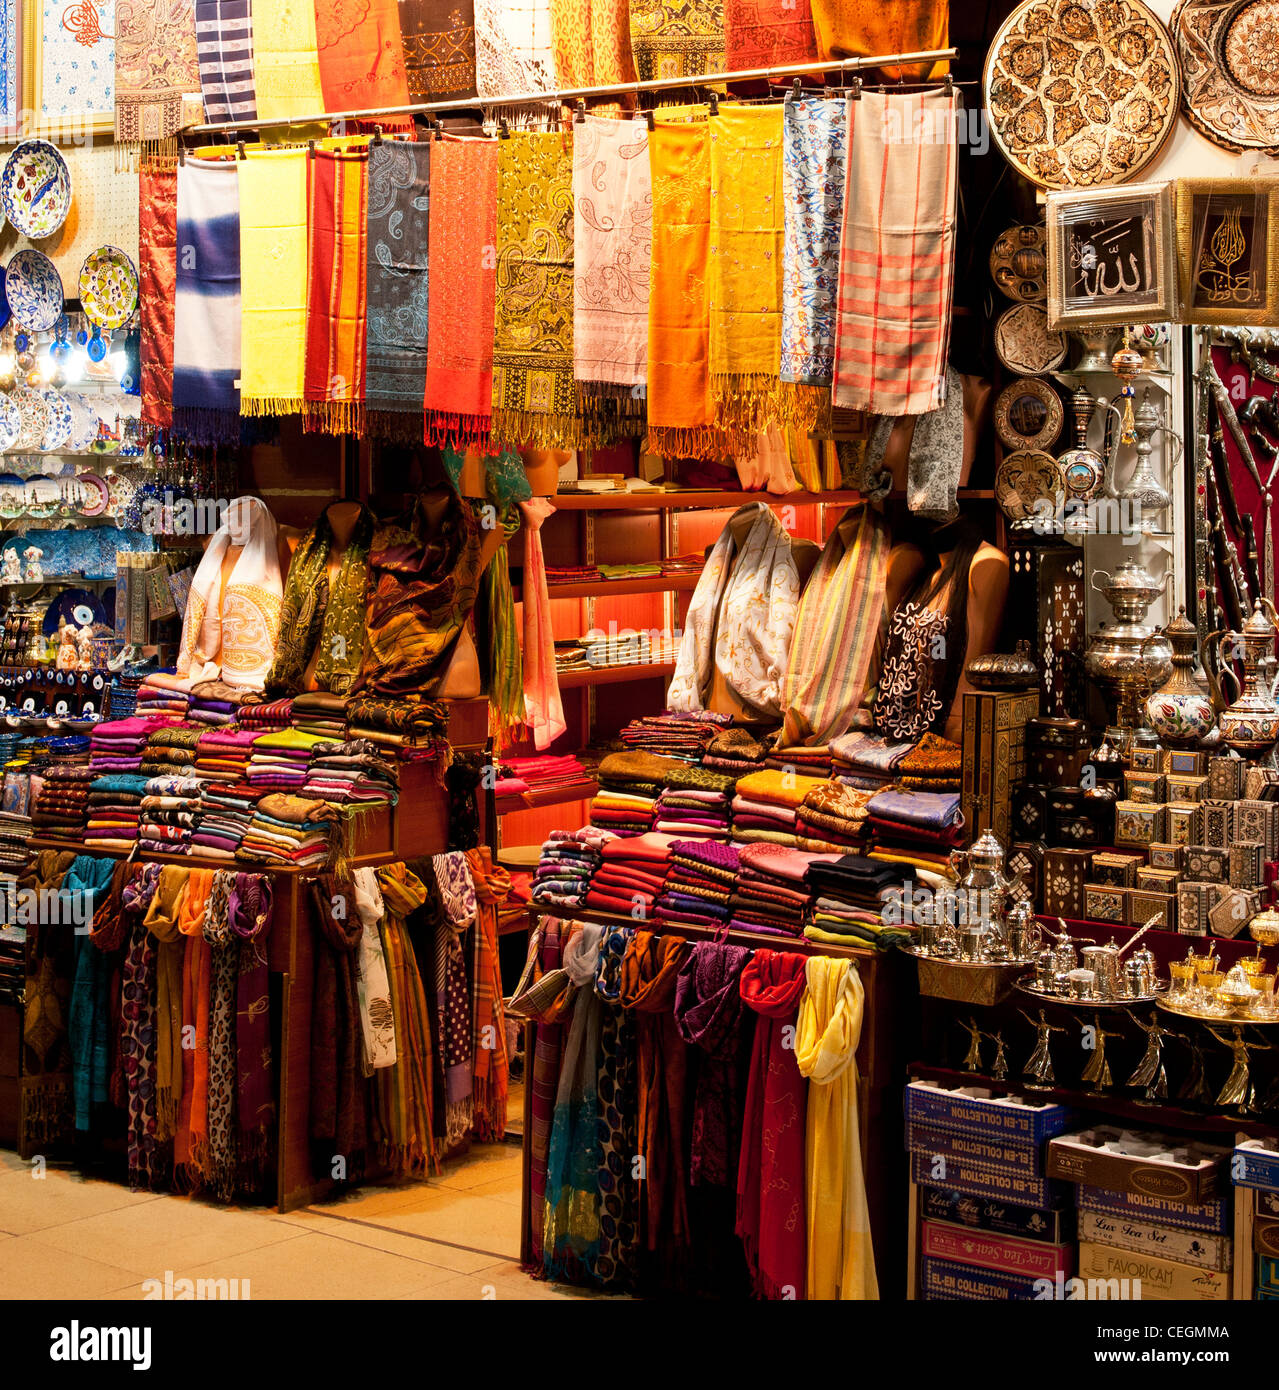 Fabric shop inside the Grand Bazaar, Istanbul, Turkey Stock Photo - Alamy